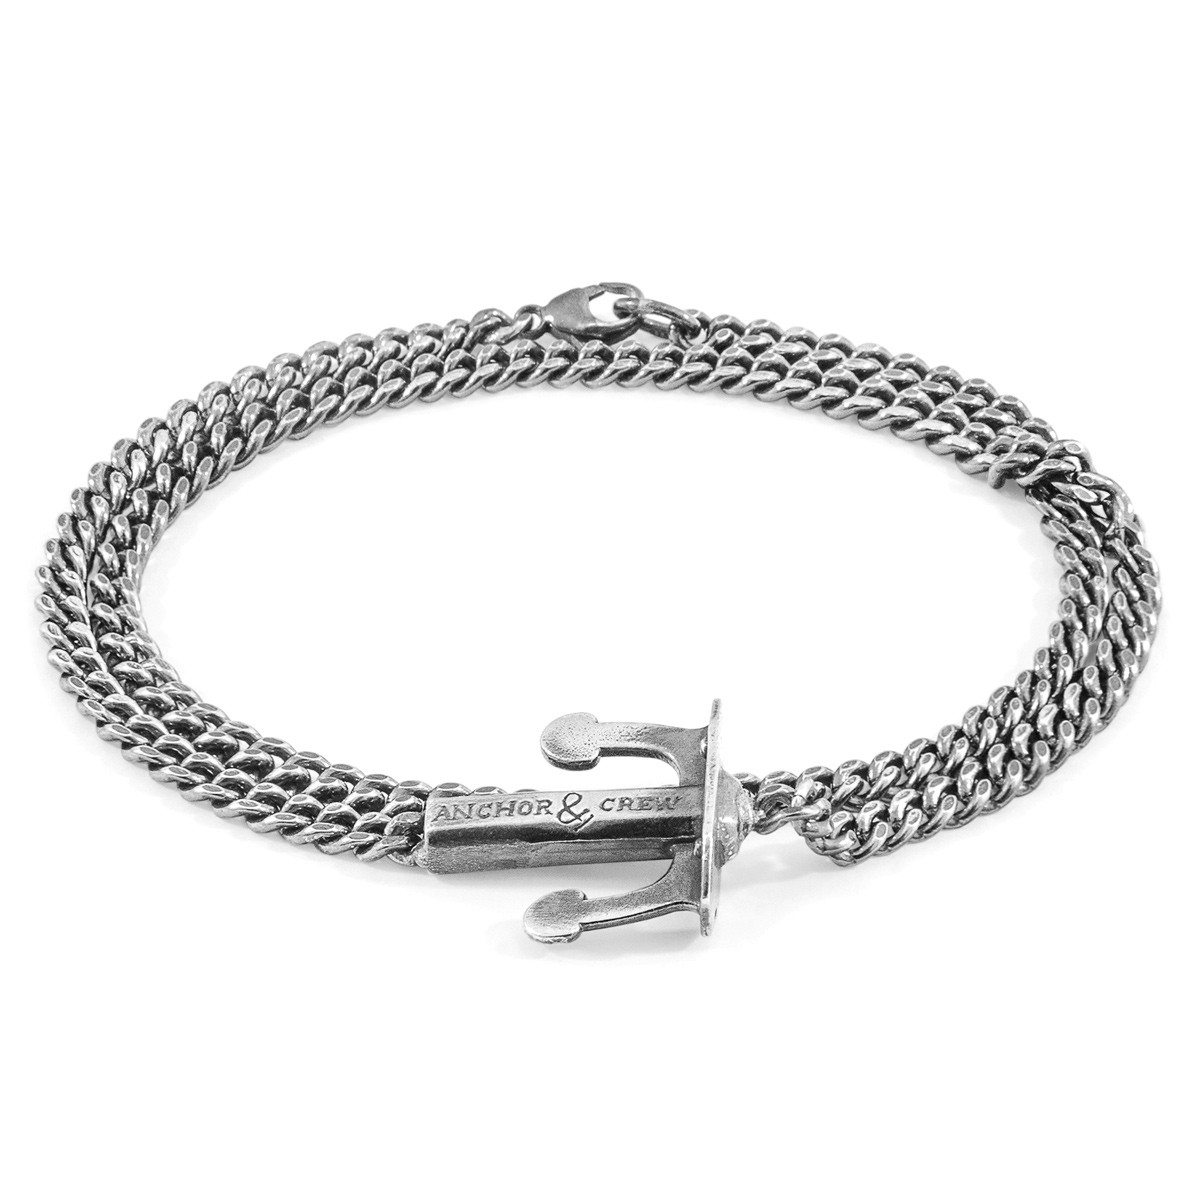 Anchor & Crew Union Anchor Double Silver Chain Bracelet